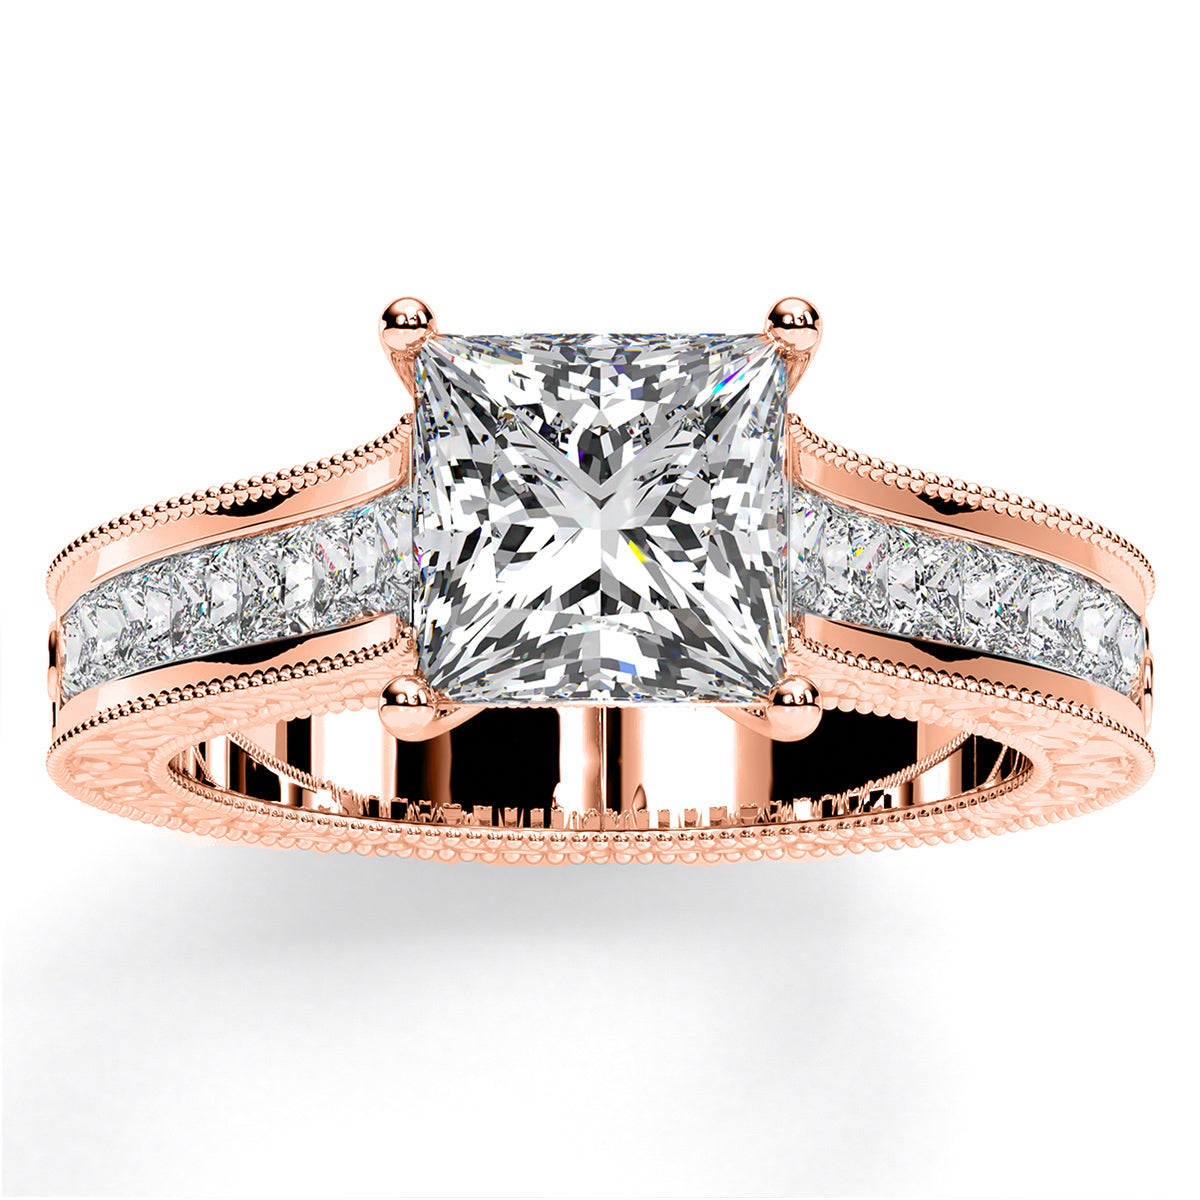 Glitz Design Engagement Rings Princess cut Diamond Rings for women Platinum  1.10 carat t.w. (J, I1) (RS 4) | Amazon.com